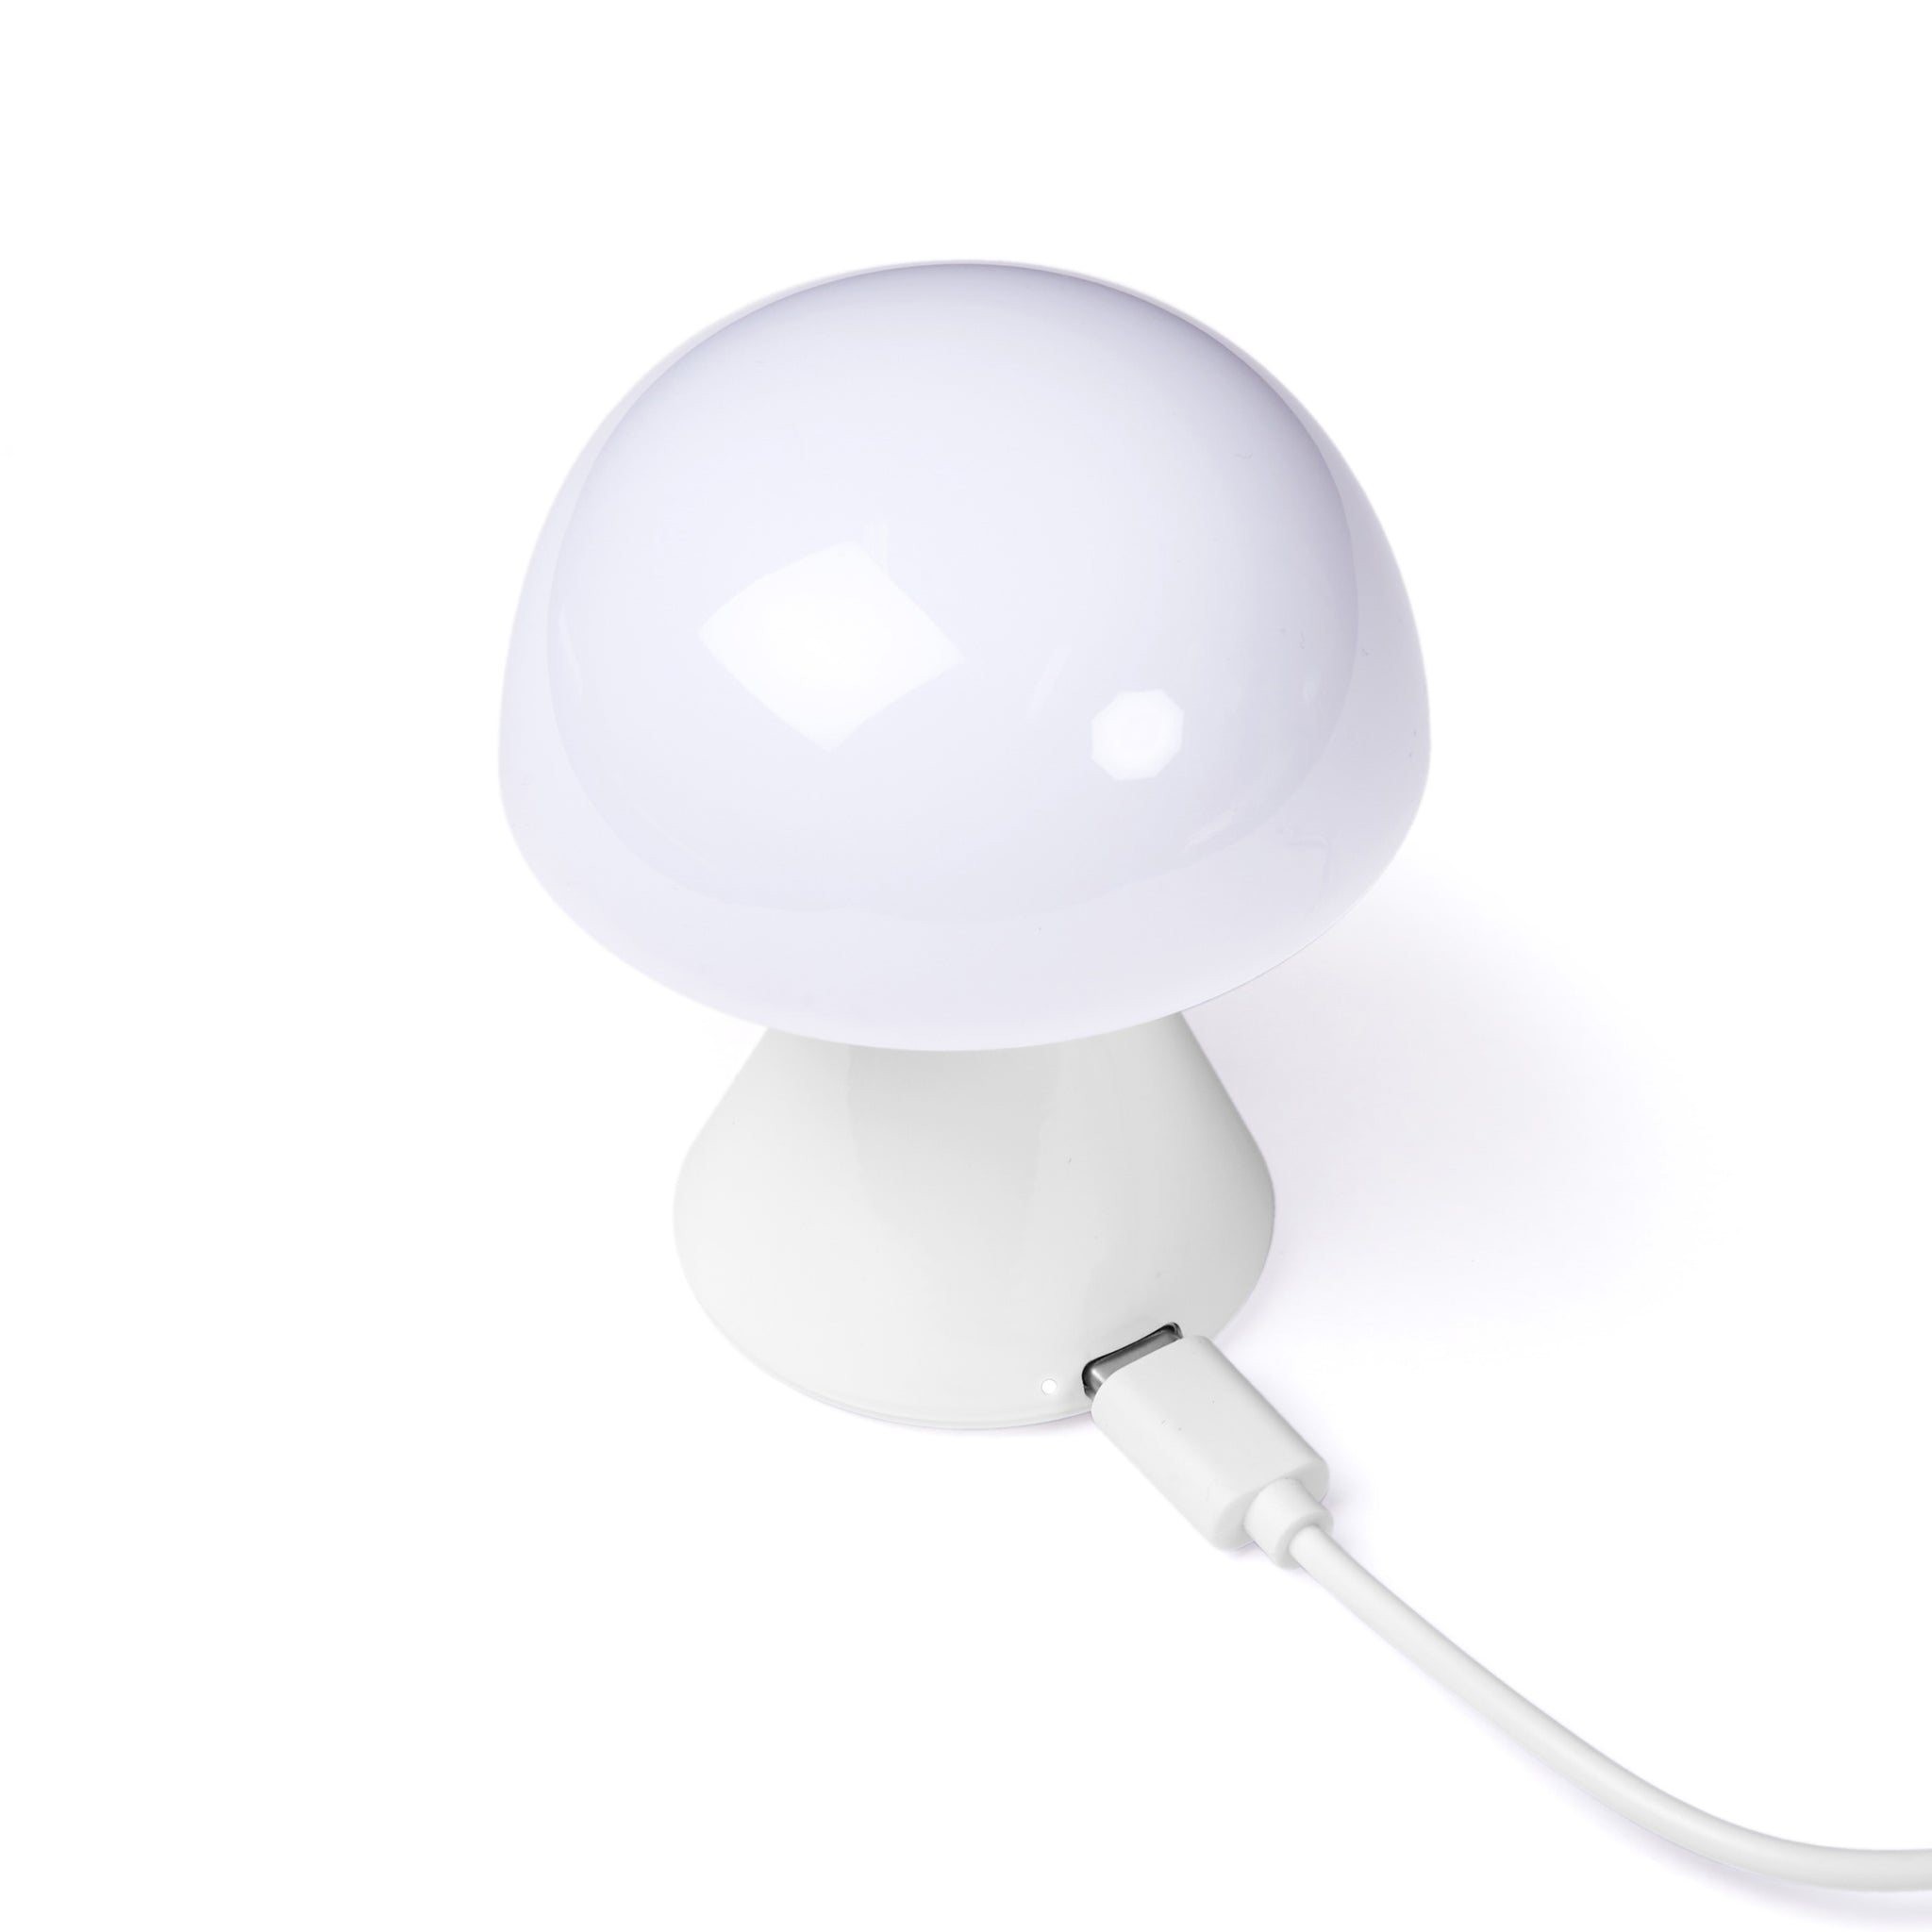 Lexon Mina Small│Oplaadbare LED lamp Glossy White│art. LH60WG│met USB-kabel